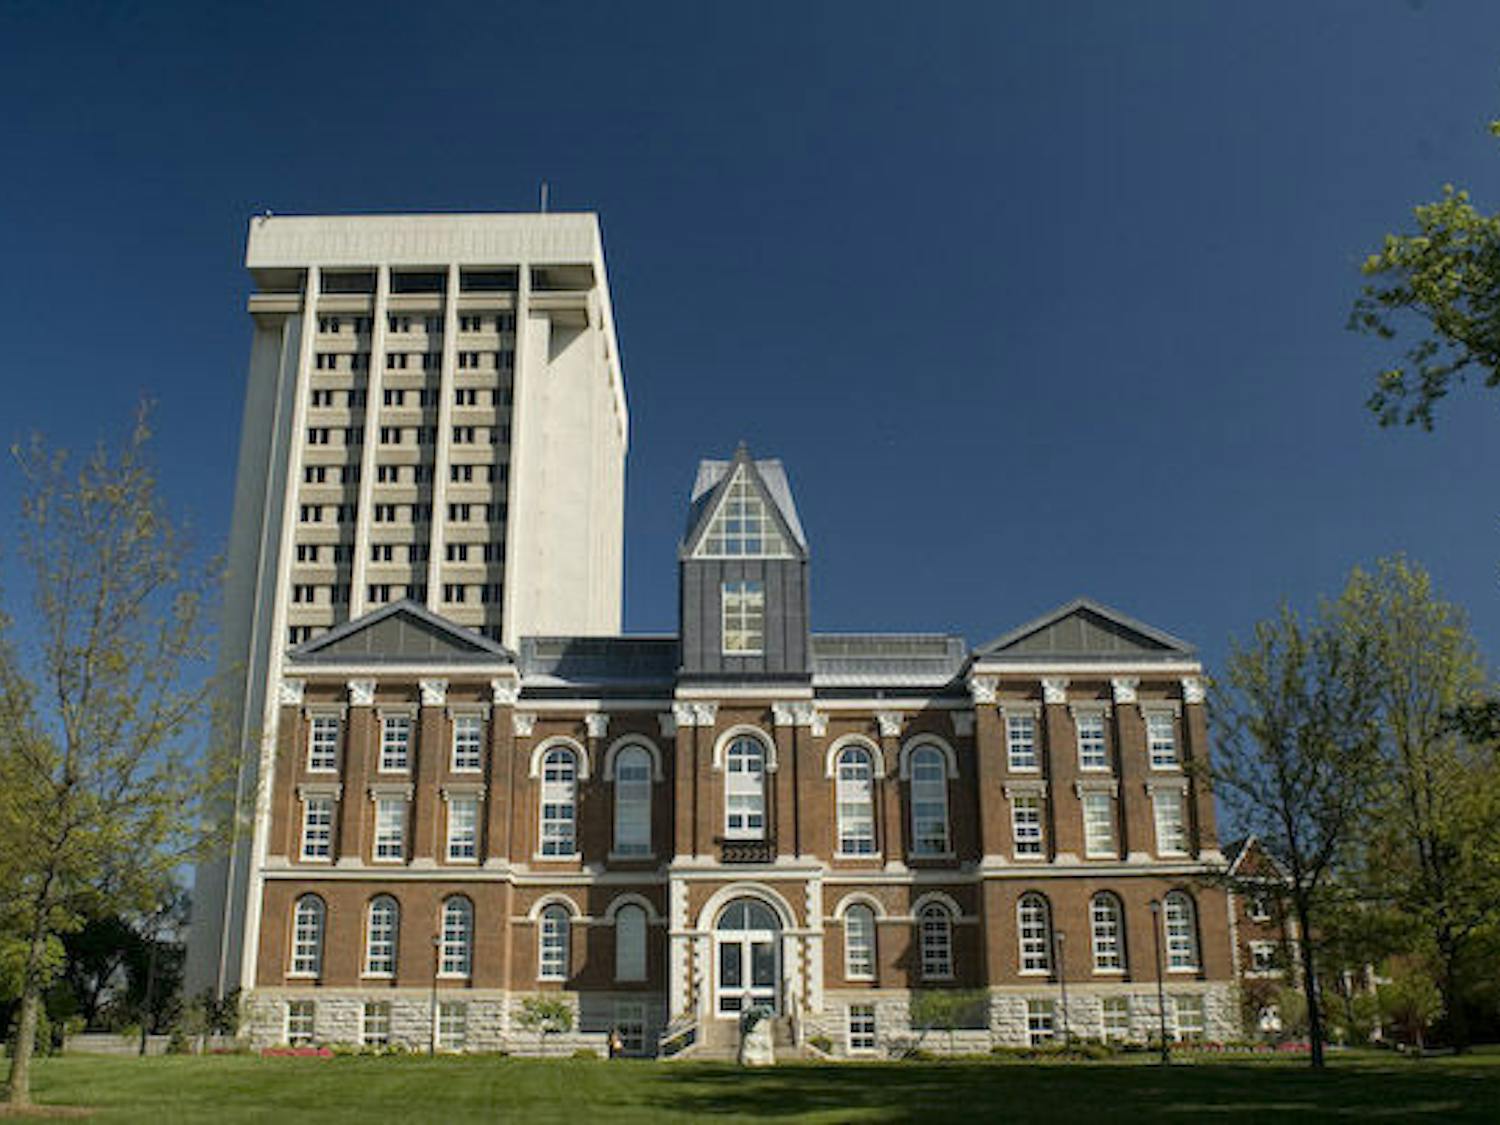 The University of Kentucky